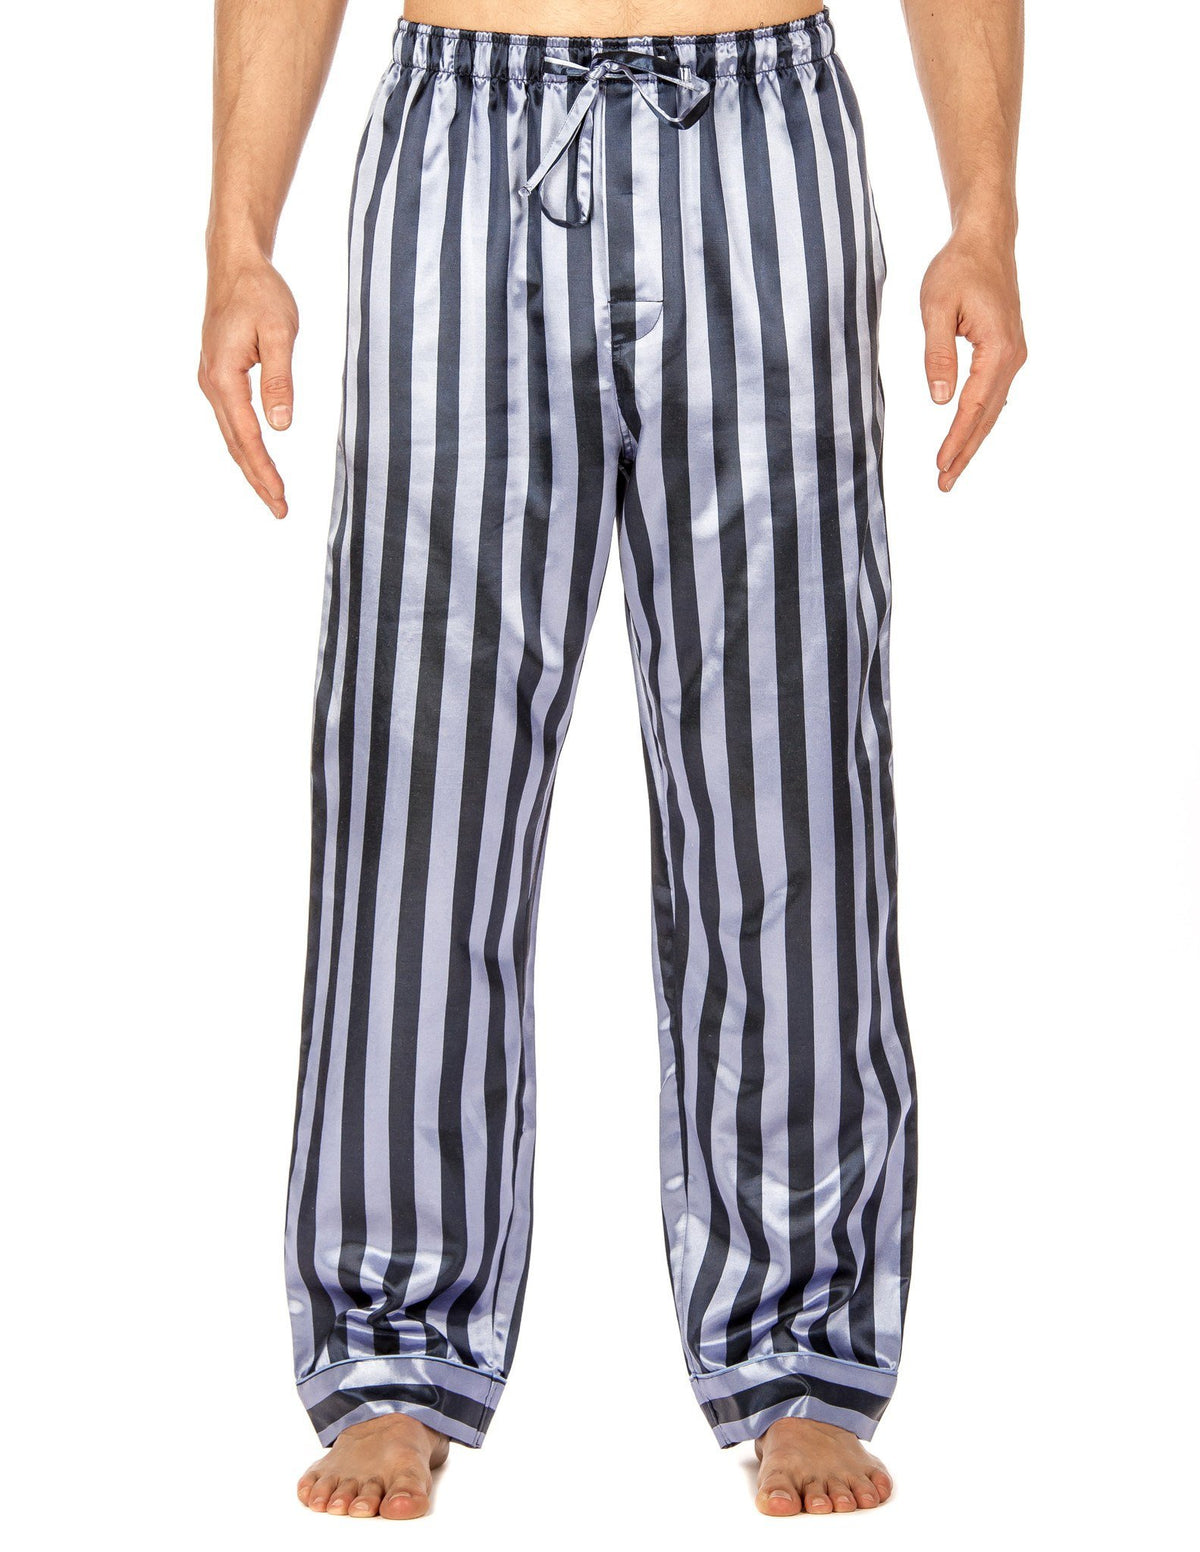 Men's Premium Satin Sleep/Lounge Pants - Denim Stripes